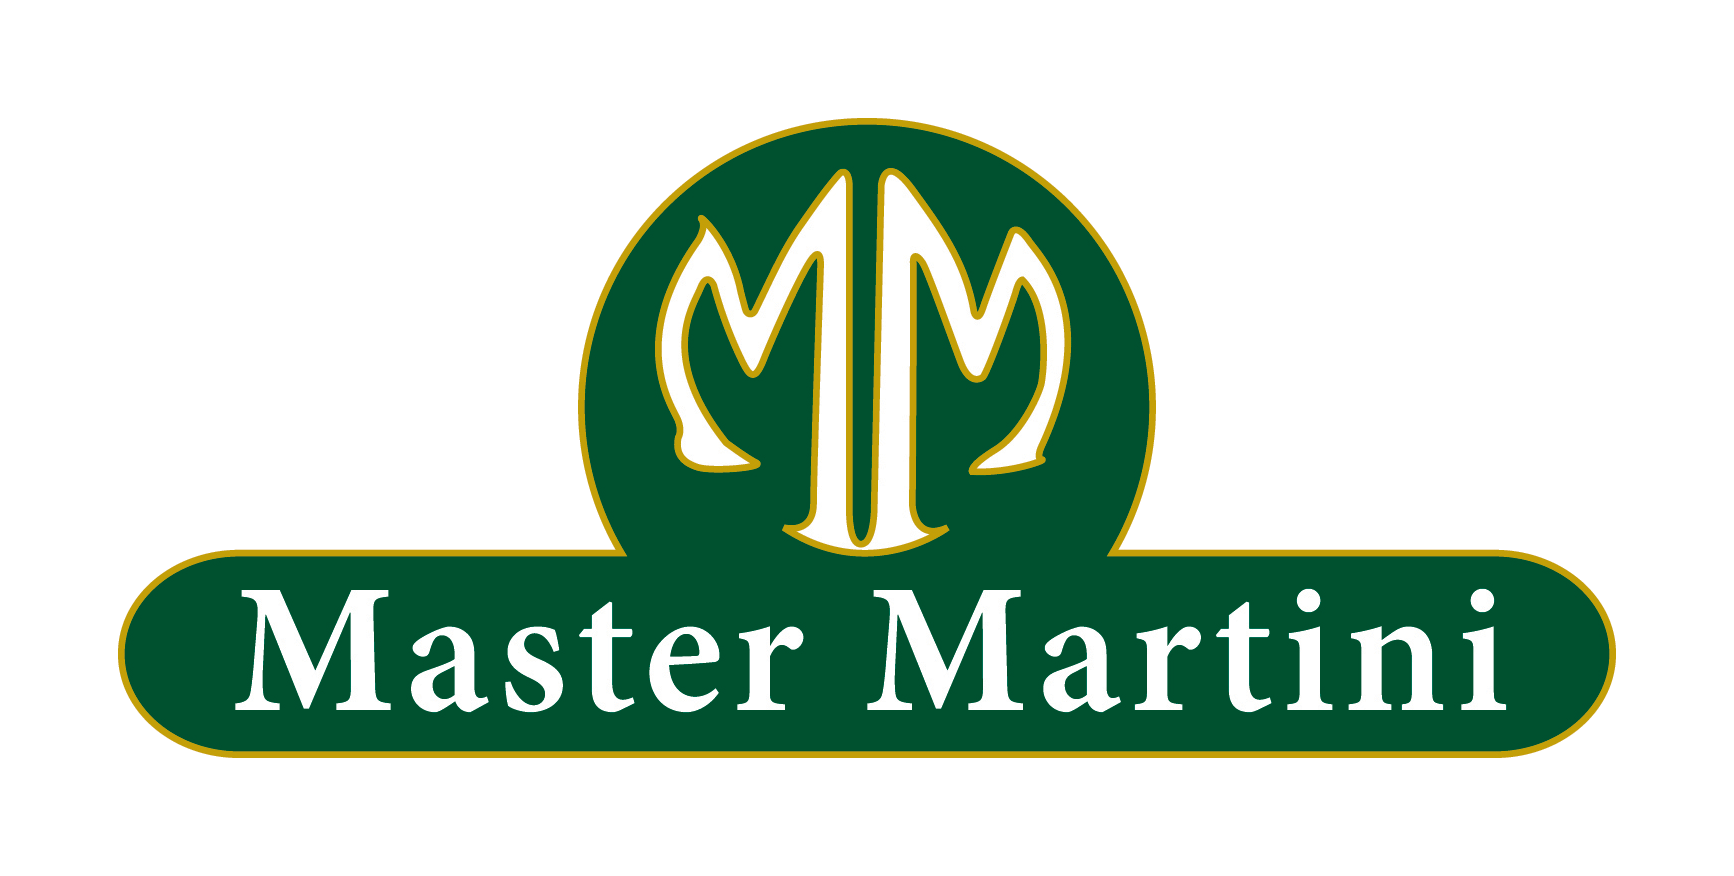 Master Martini transparent logo